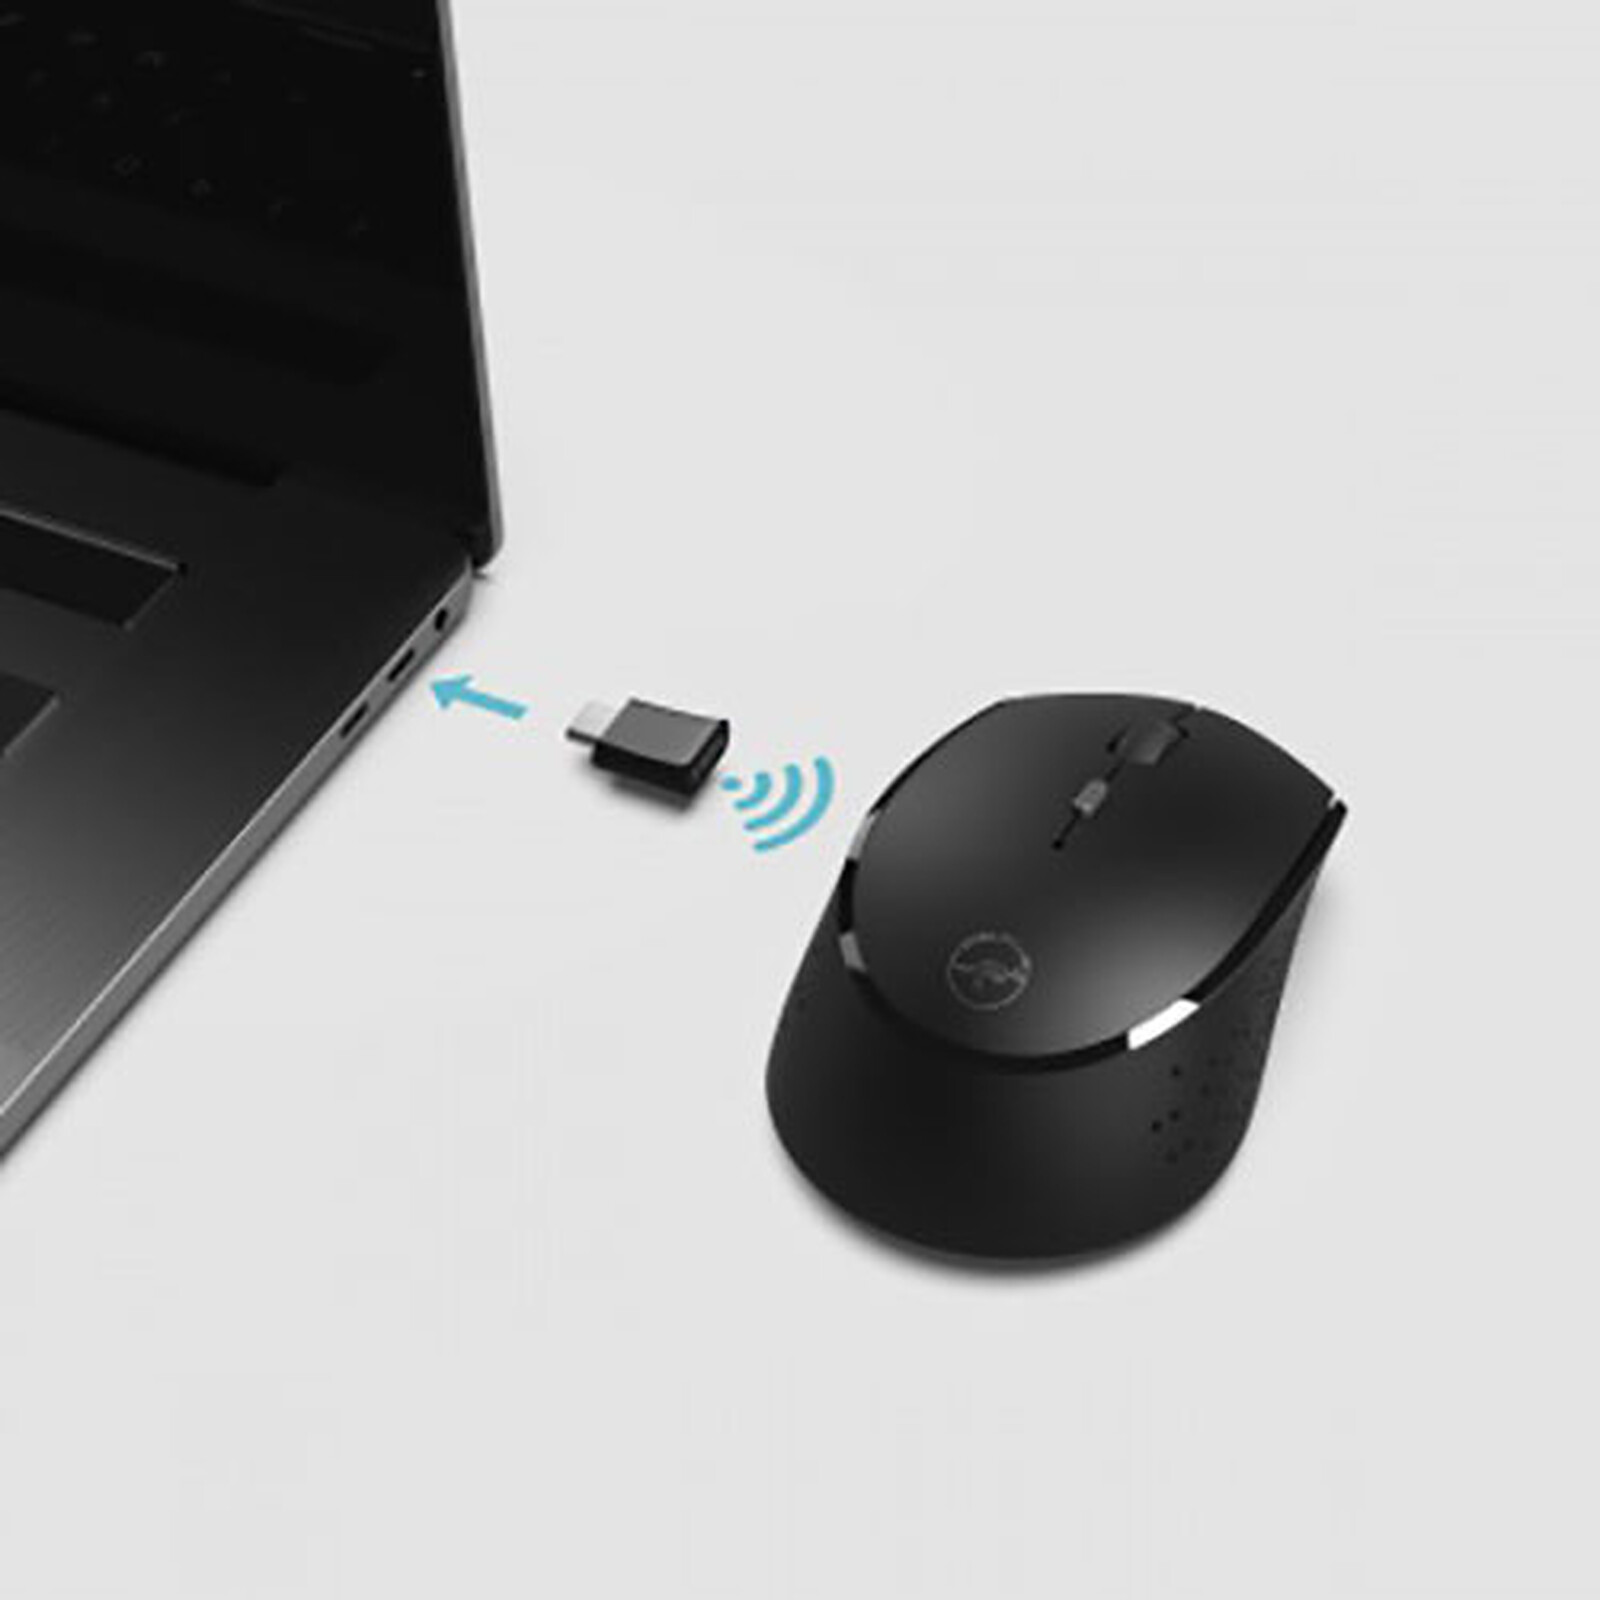 MOBILITY LAB - Ratón inalámbrico recargable USB-C para MAC y